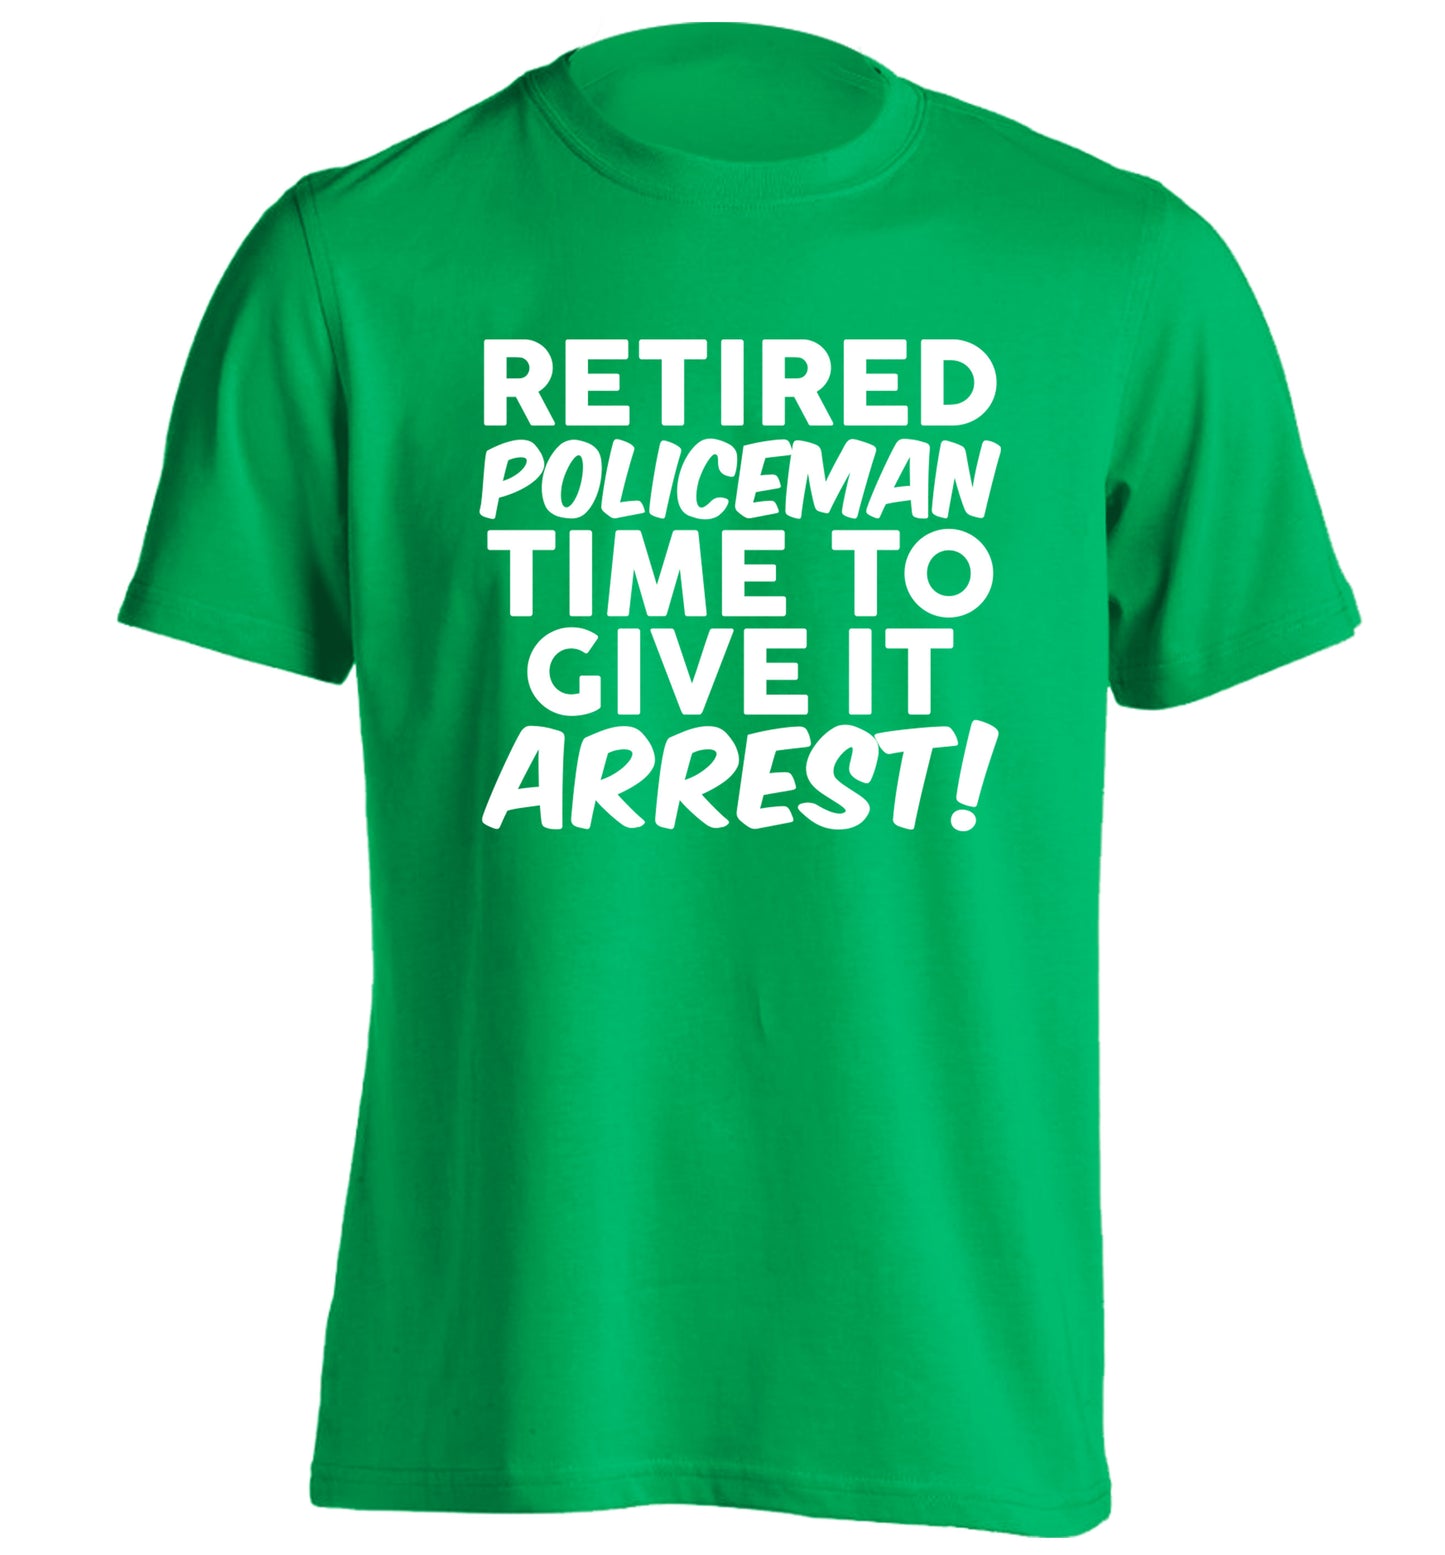 Retired policeman give it arresst! adults unisex green Tshirt 2XL